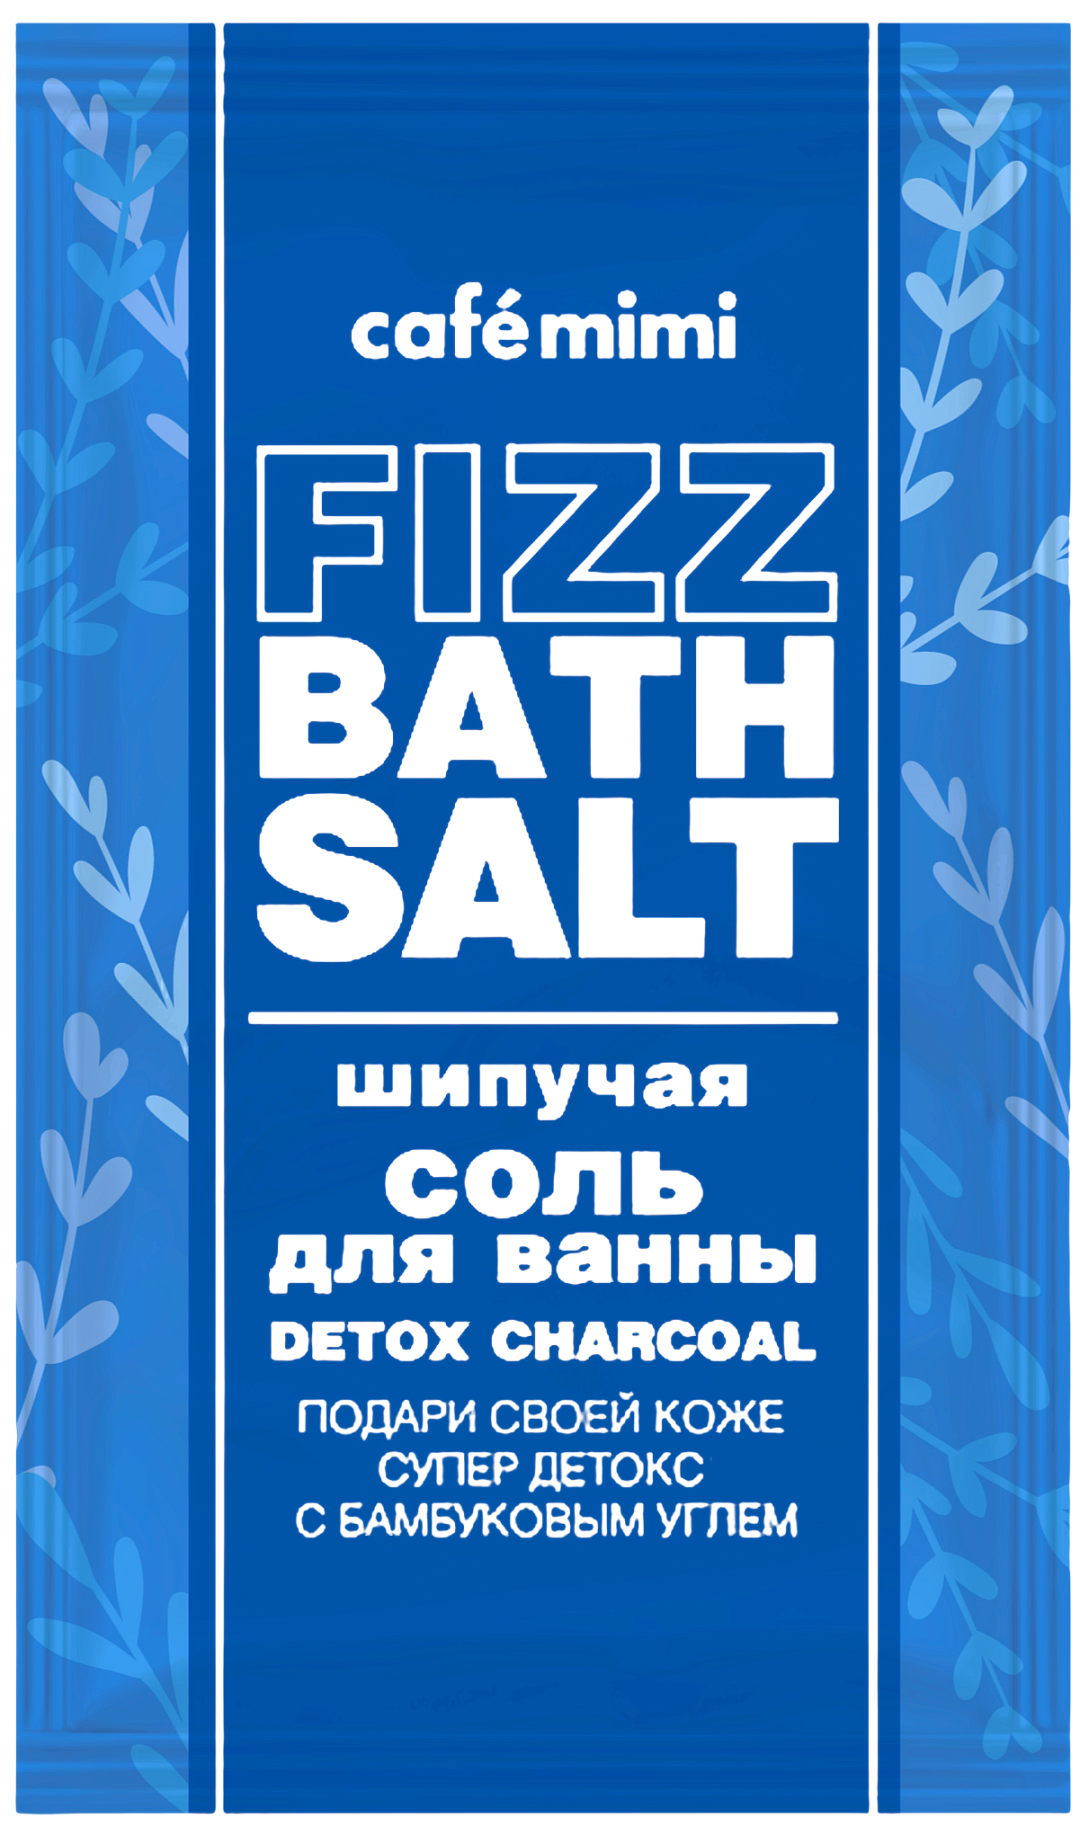 Соль шипучая для ванн с Бамбуковым углем Detox Charcaol